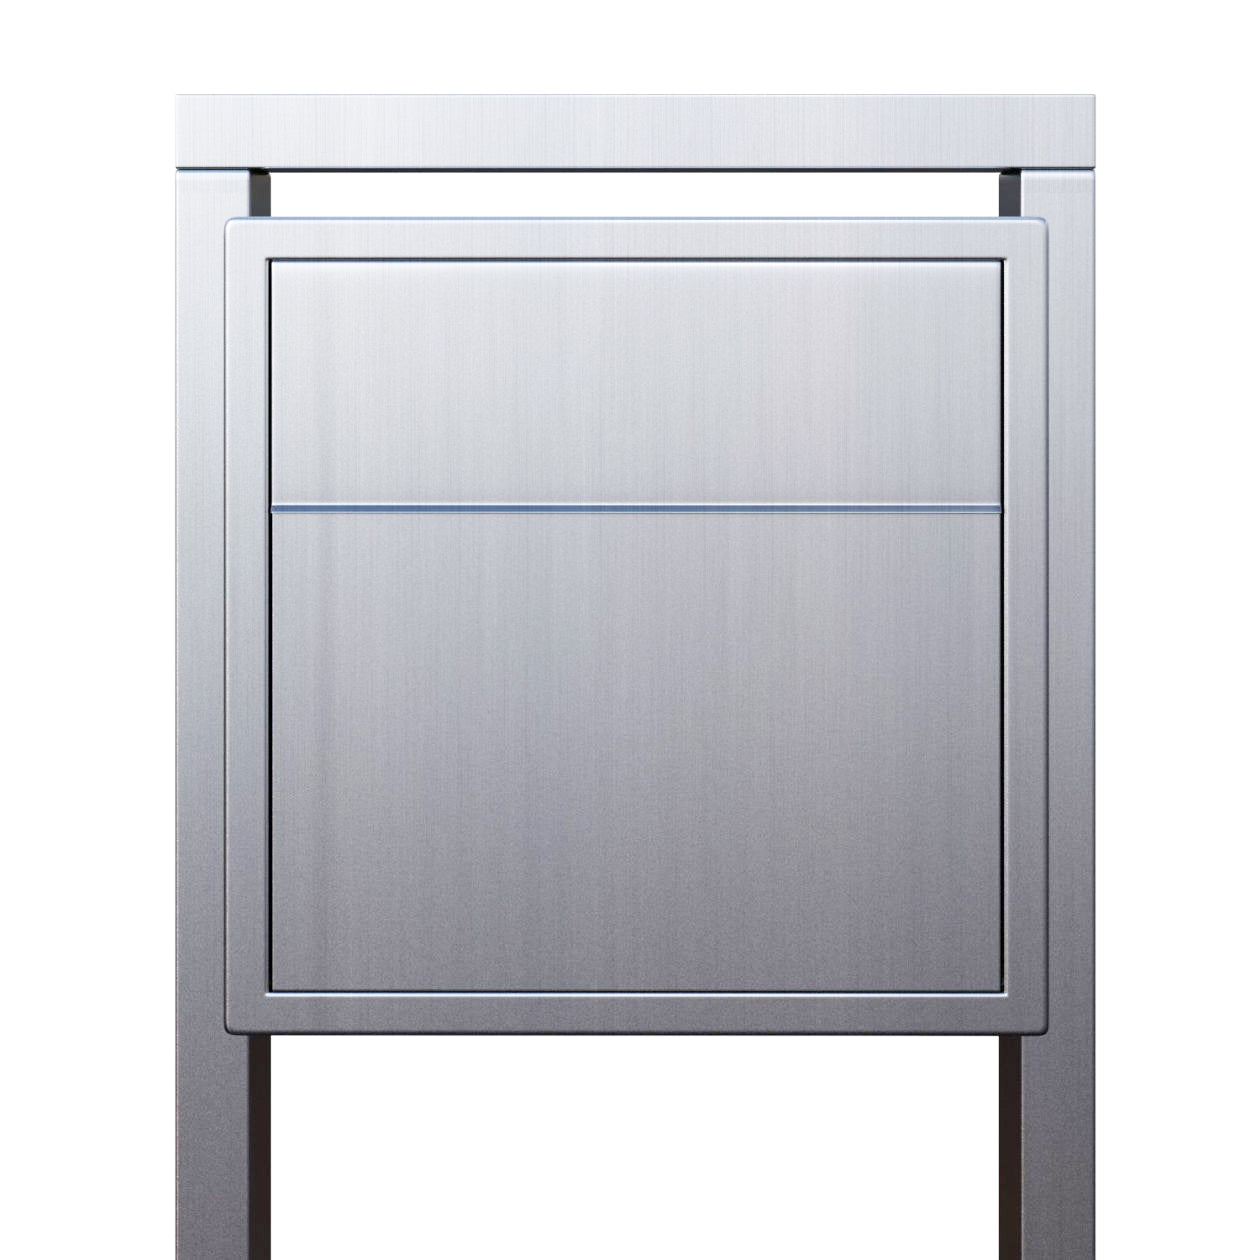 SOPRANO by Bravios - Modern post-mounted stainless steel mailbox